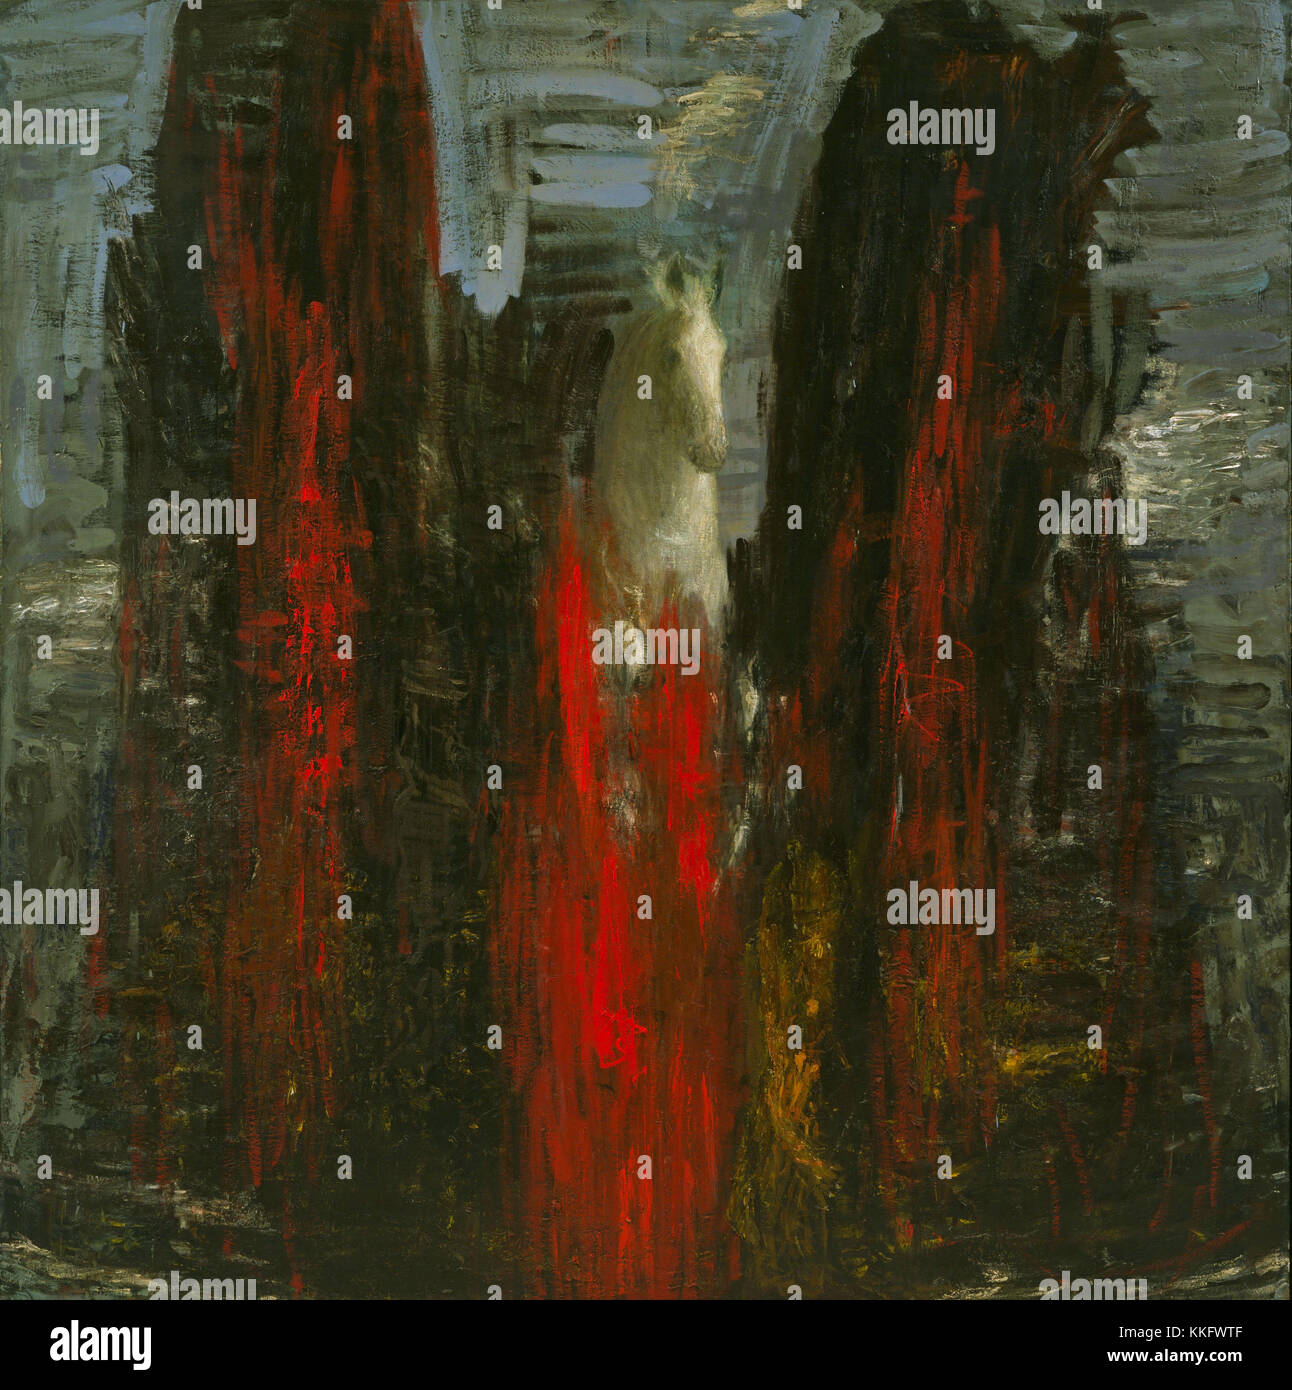 Christopher Le Brun. (Britisch, geb. 1951). Prow. 1983. Öl auf Leinwand, 8' 6' x 8' 6' (259,1 x 259,1 cm). Geschenk von UBS. © 2008 Christopher Le Brun / Artists Rights Society (ARS), New York / DACS, London Stockfoto